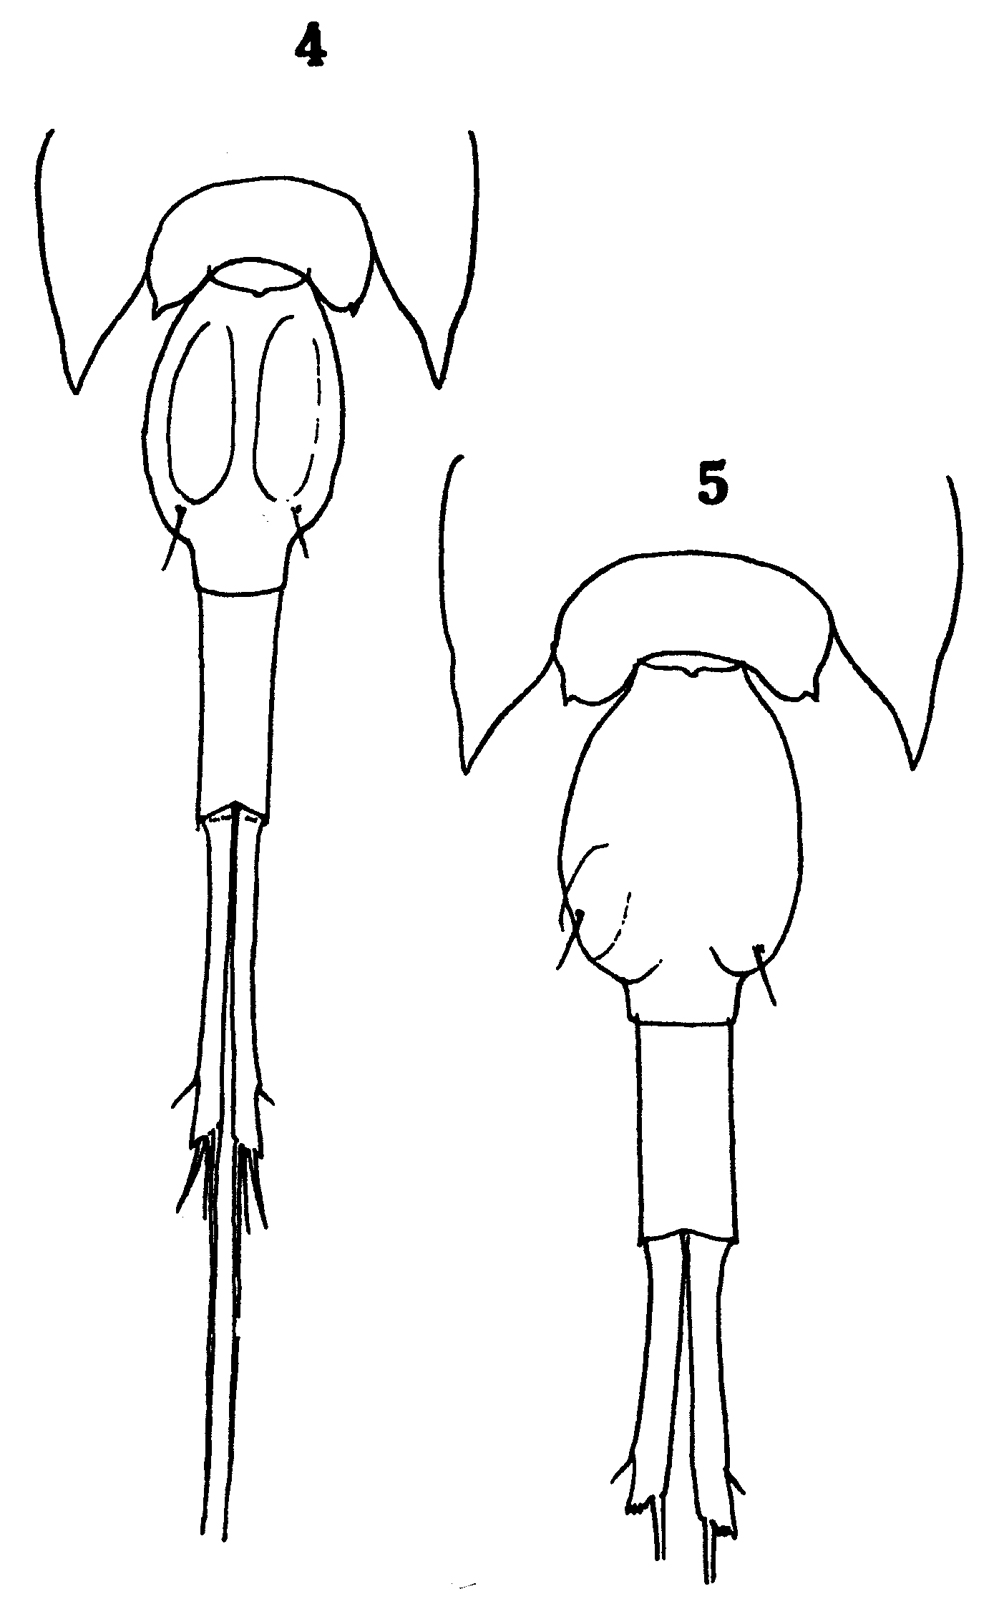 Species Corycaeus (Onychocorycaeus) agilis - Plate 18 of morphological figures